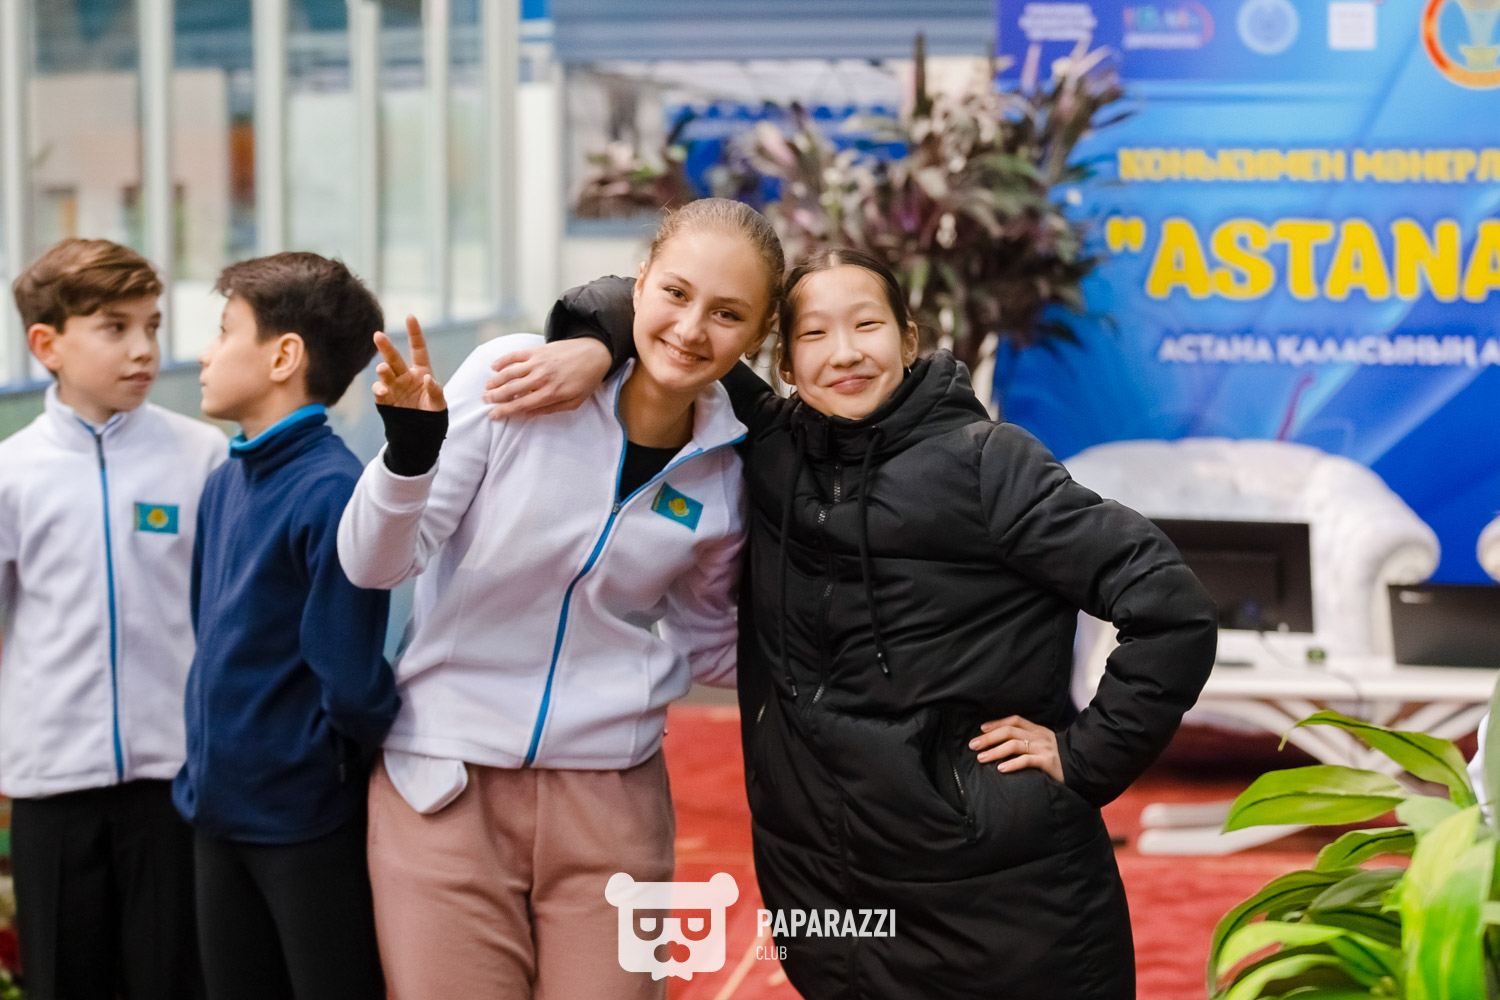 «Astana Open» открытый чемпионат г. Астана по фигурному катанию